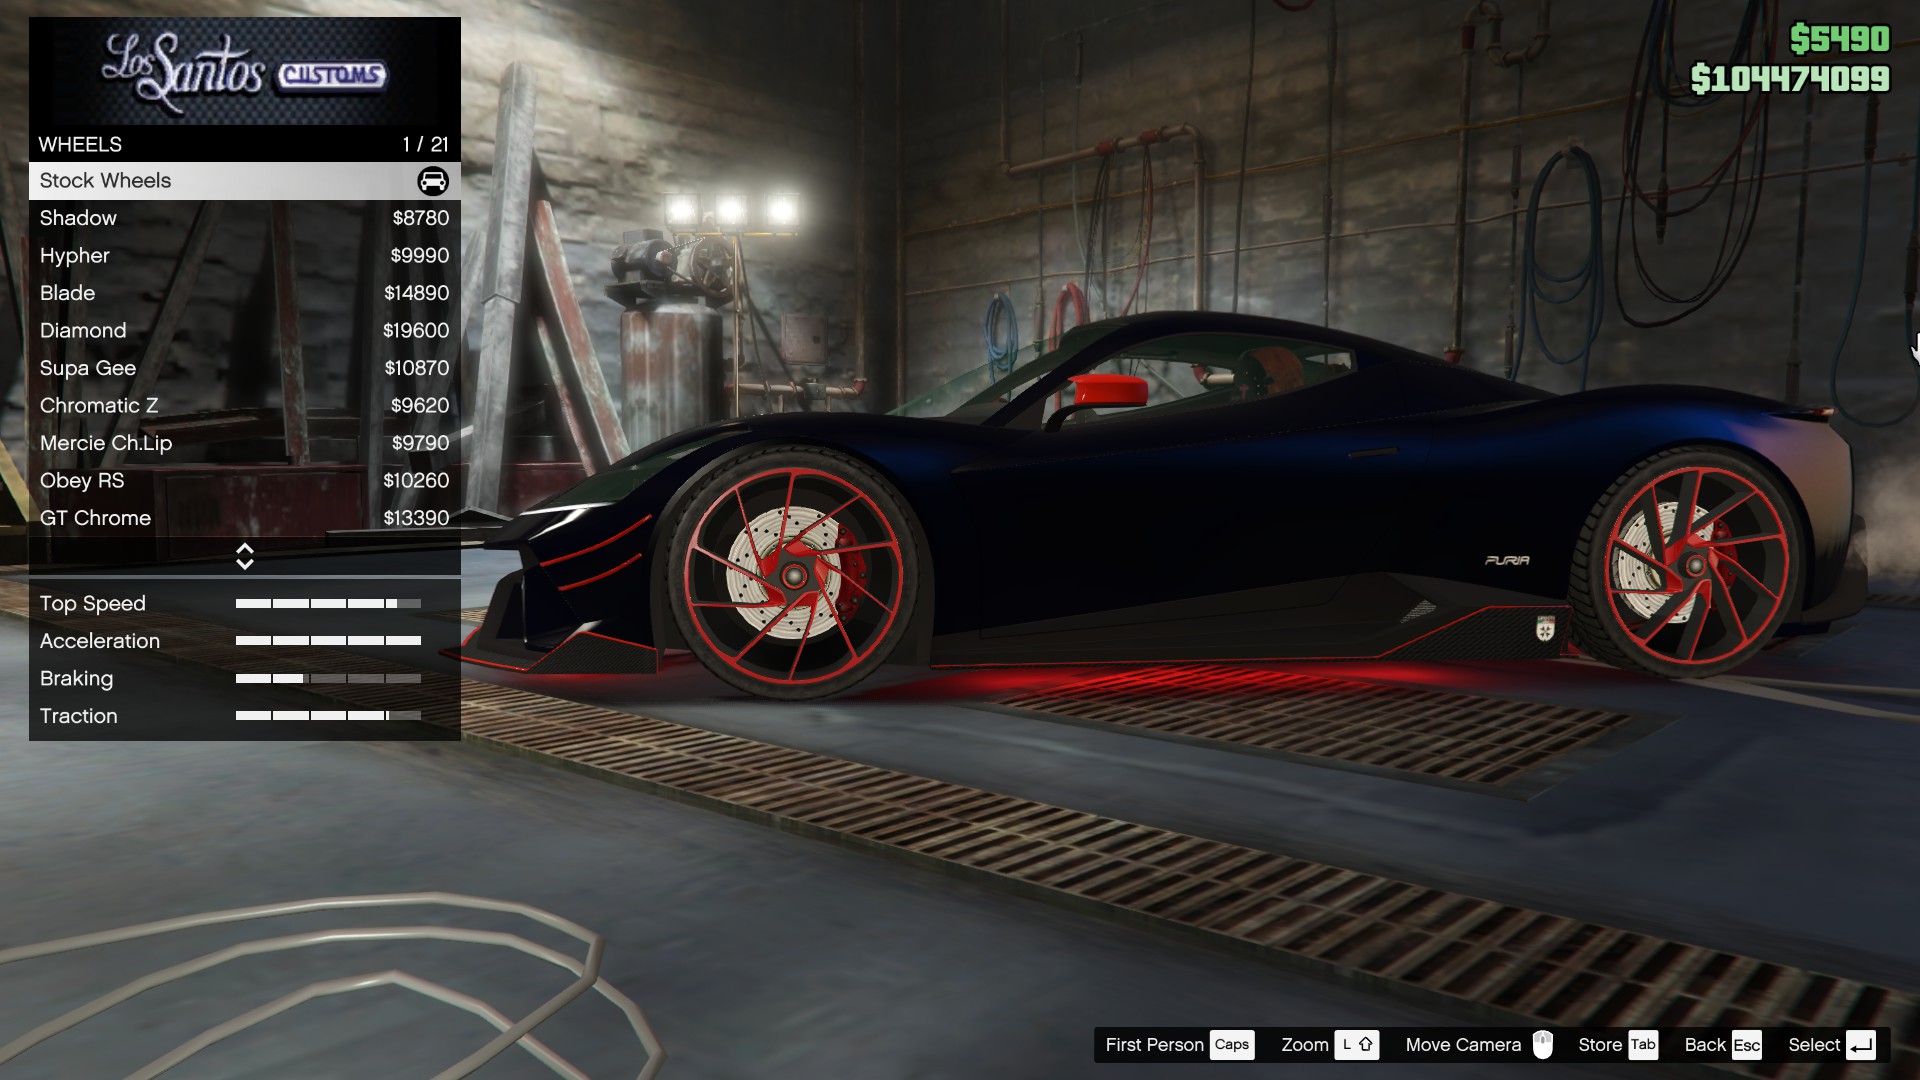 Grand Theft Auto V - How To Change Stock Wheel Color - Cars you can Change Stock Wheel Colors: - 6FF0196